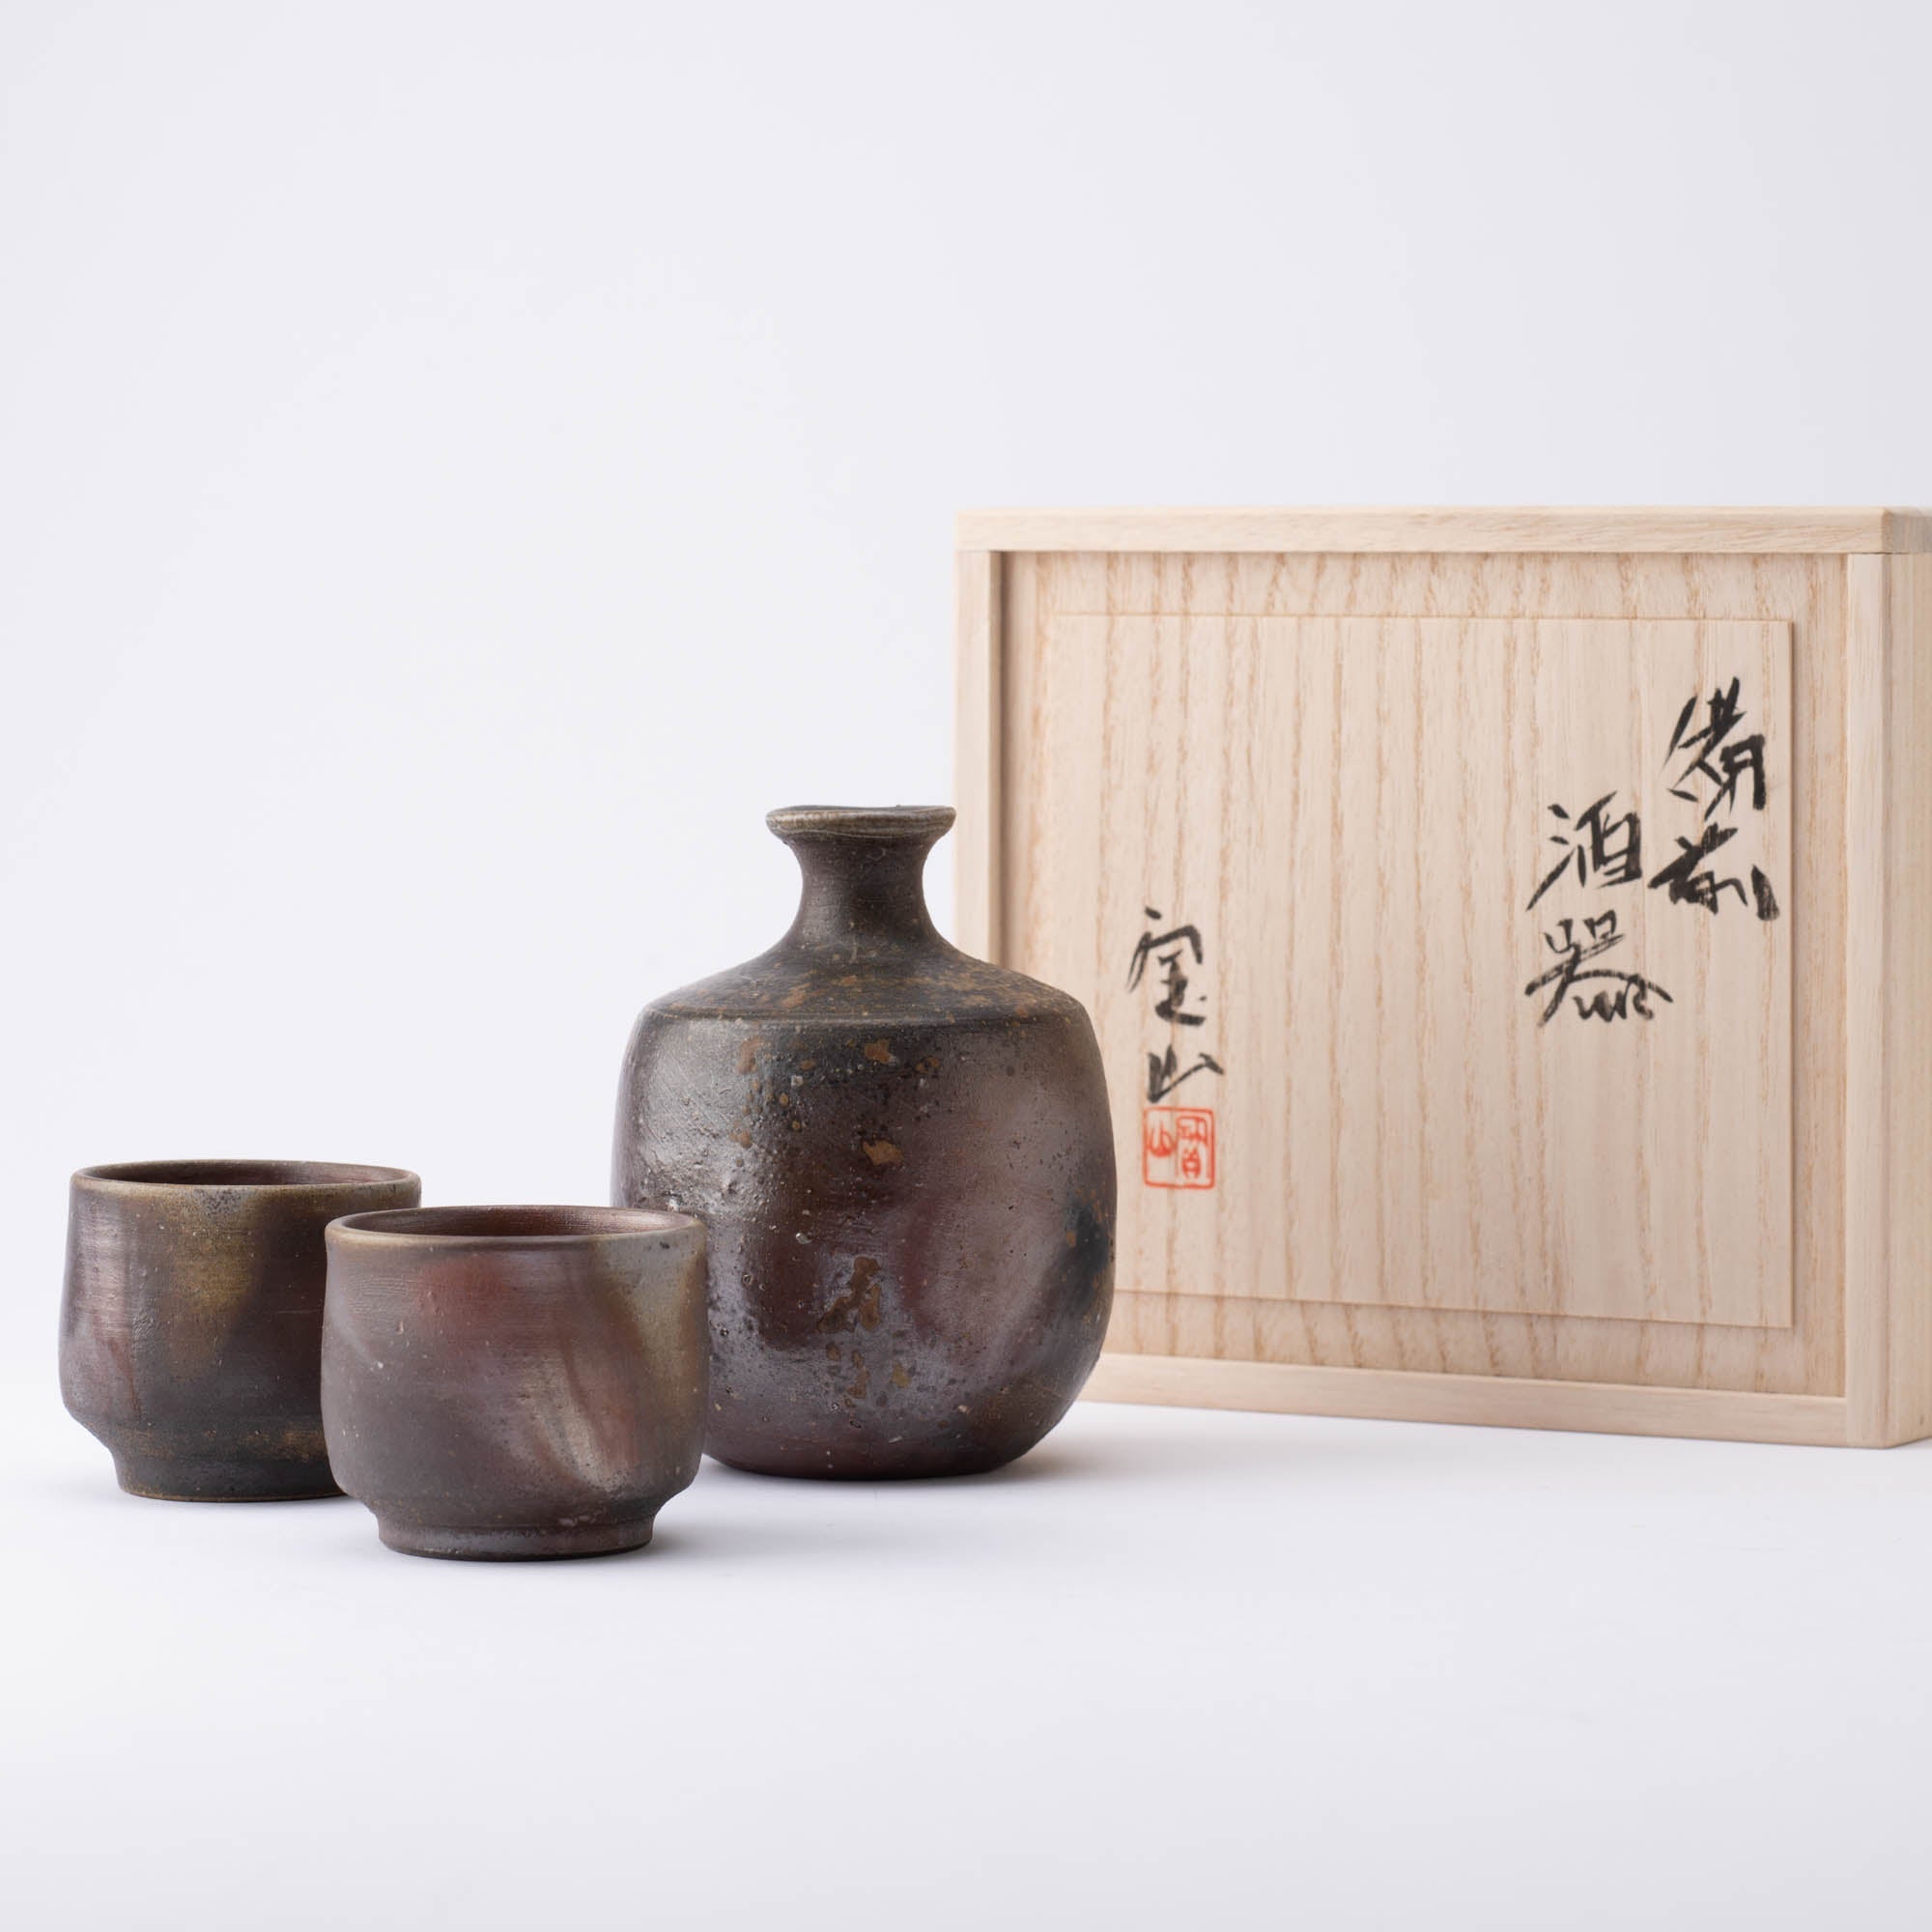 Japanese Glazed Ceramic Sake Set with Oriental Style Blue Ocean Waves Design Includes Serving Carafe and 4 Sake Cups